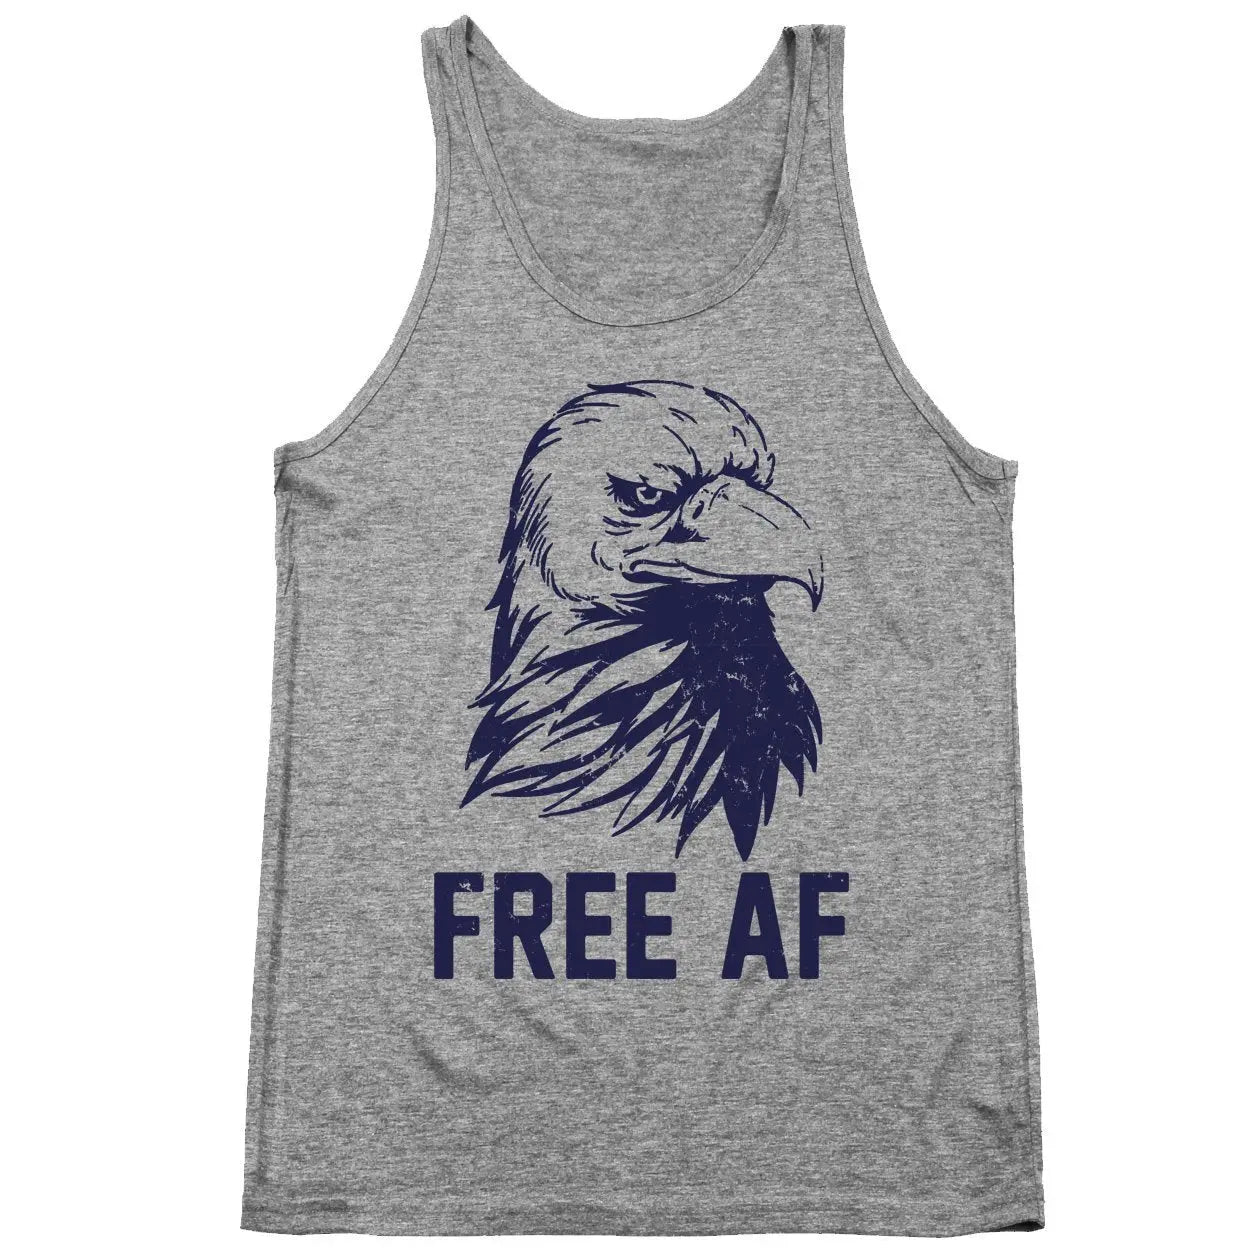 Free AF Tshirt - Donkey Tees